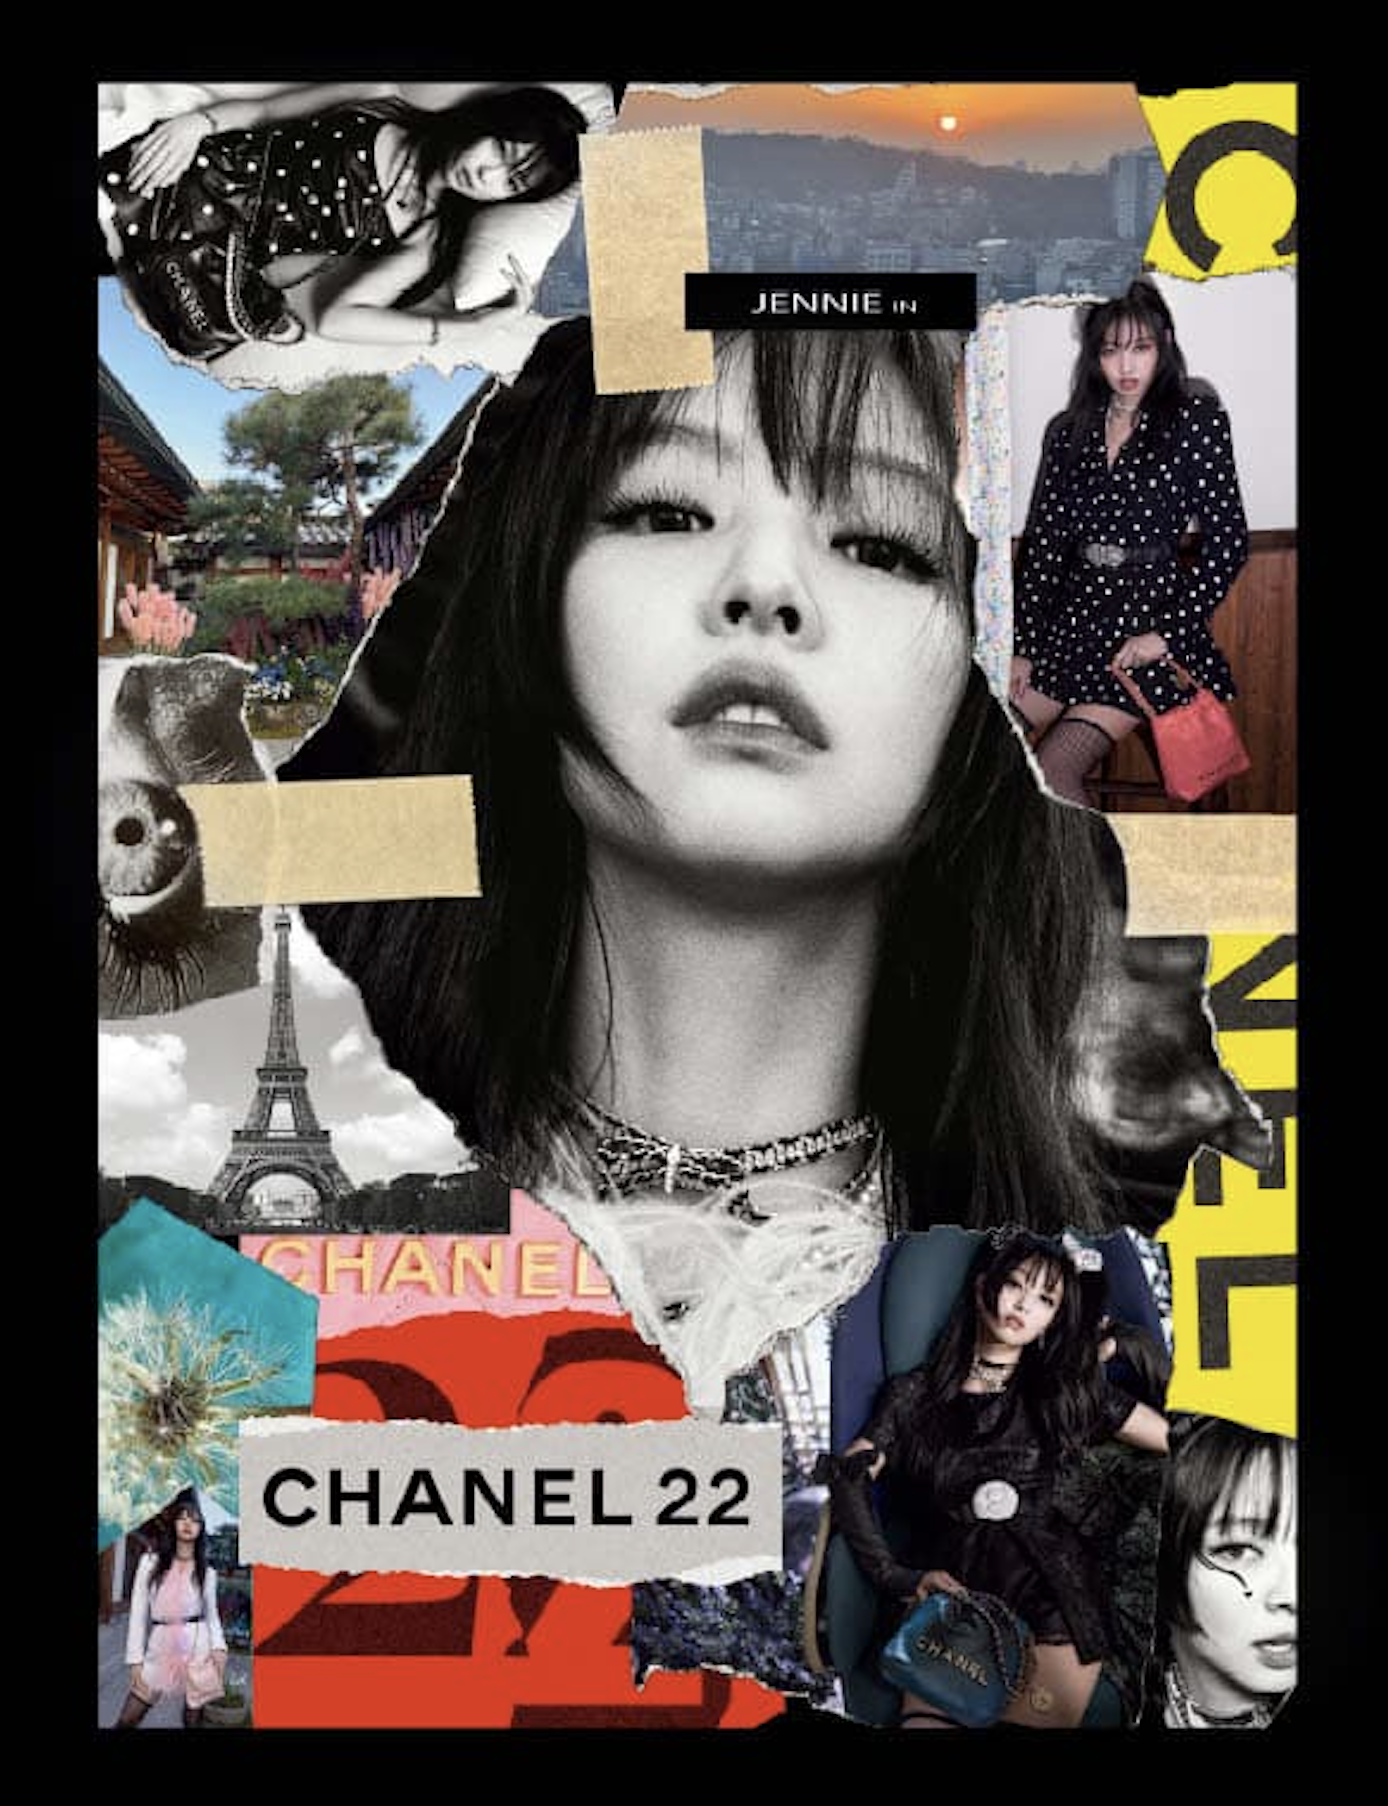 Chanel Coco Crush: Blackpink's Jennie Models The Latest Jewellery Designs